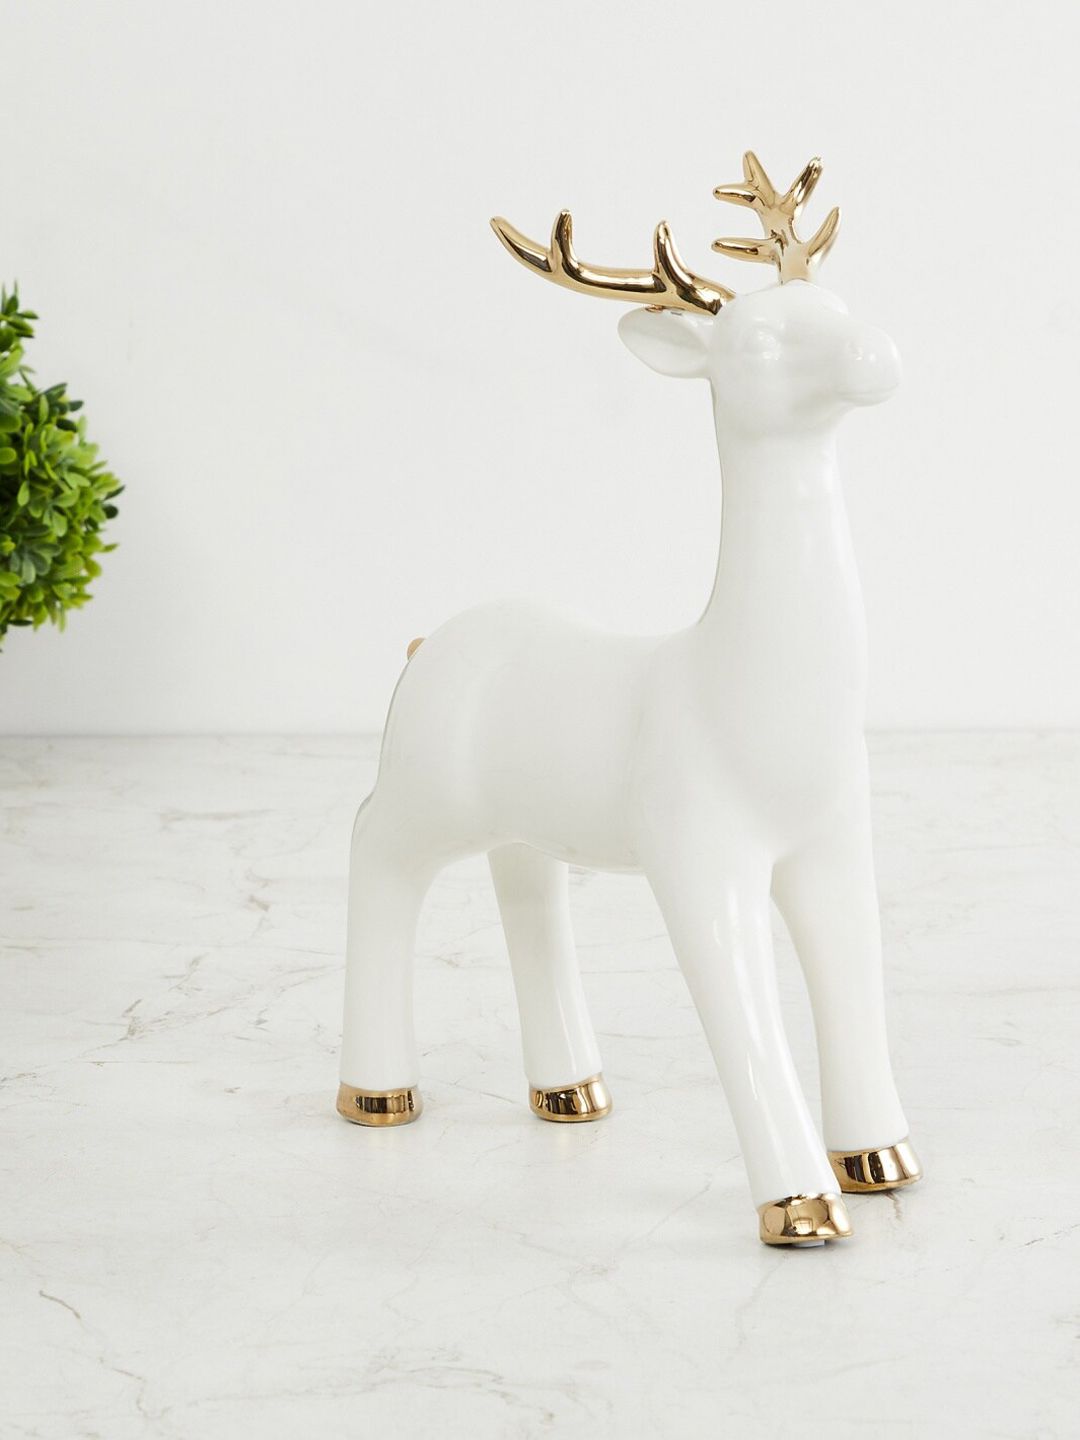 Home Centre White & Rose Gold-Toned Brighton Ceramic Standing Reindeer Figurine Showpiece Price in India